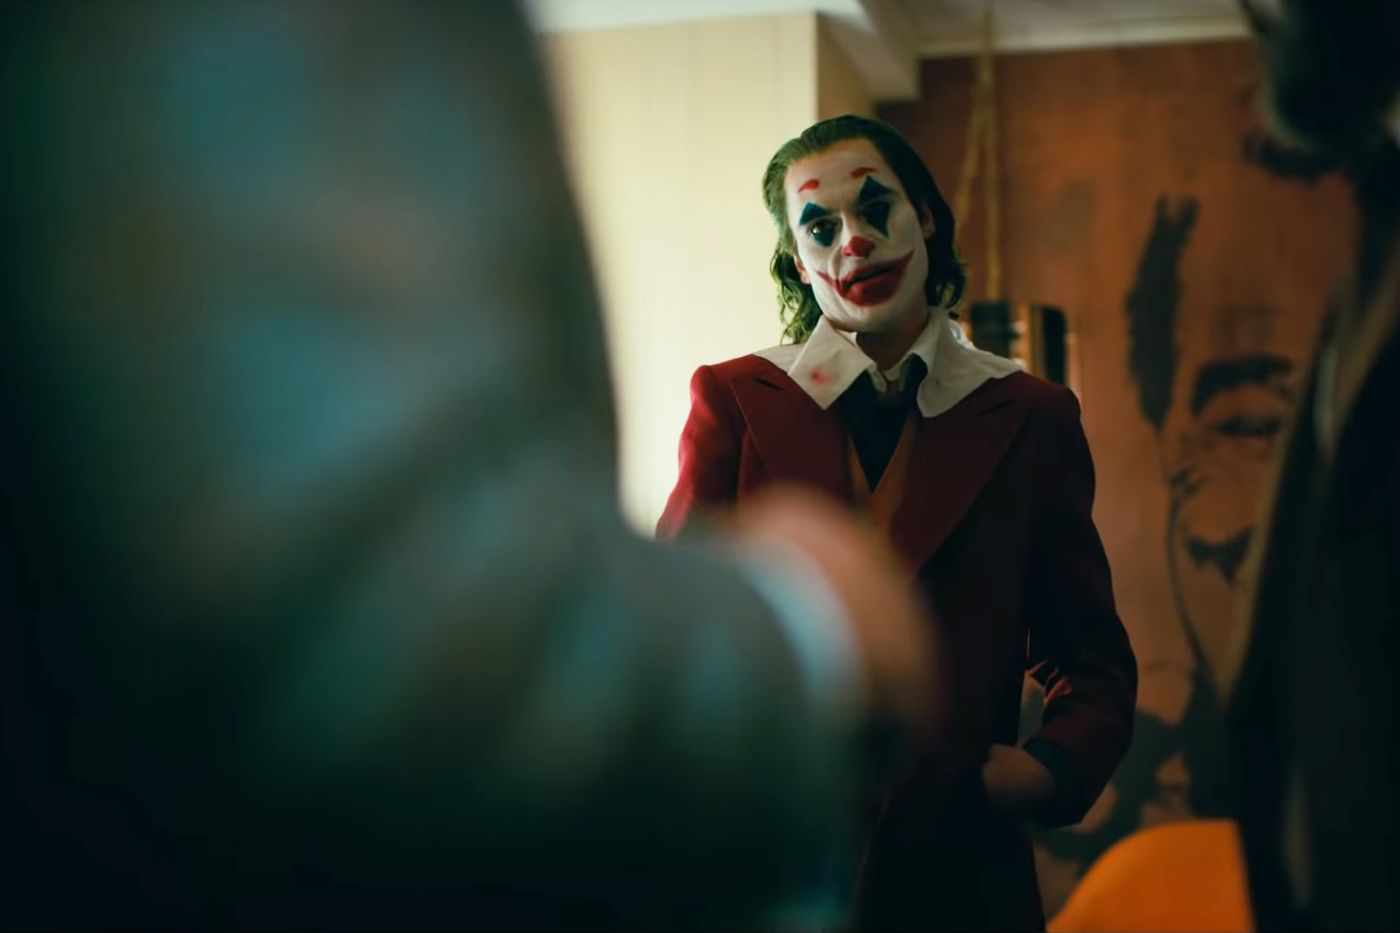 Joker - Joaquin Phoenix - Fan Art - Hollywood English Action Movie Poster -  Art Prints by Brad | Buy Posters, Frames, Canvas & Digital Art Prints |  Small, Compact, Medium and Large Variants